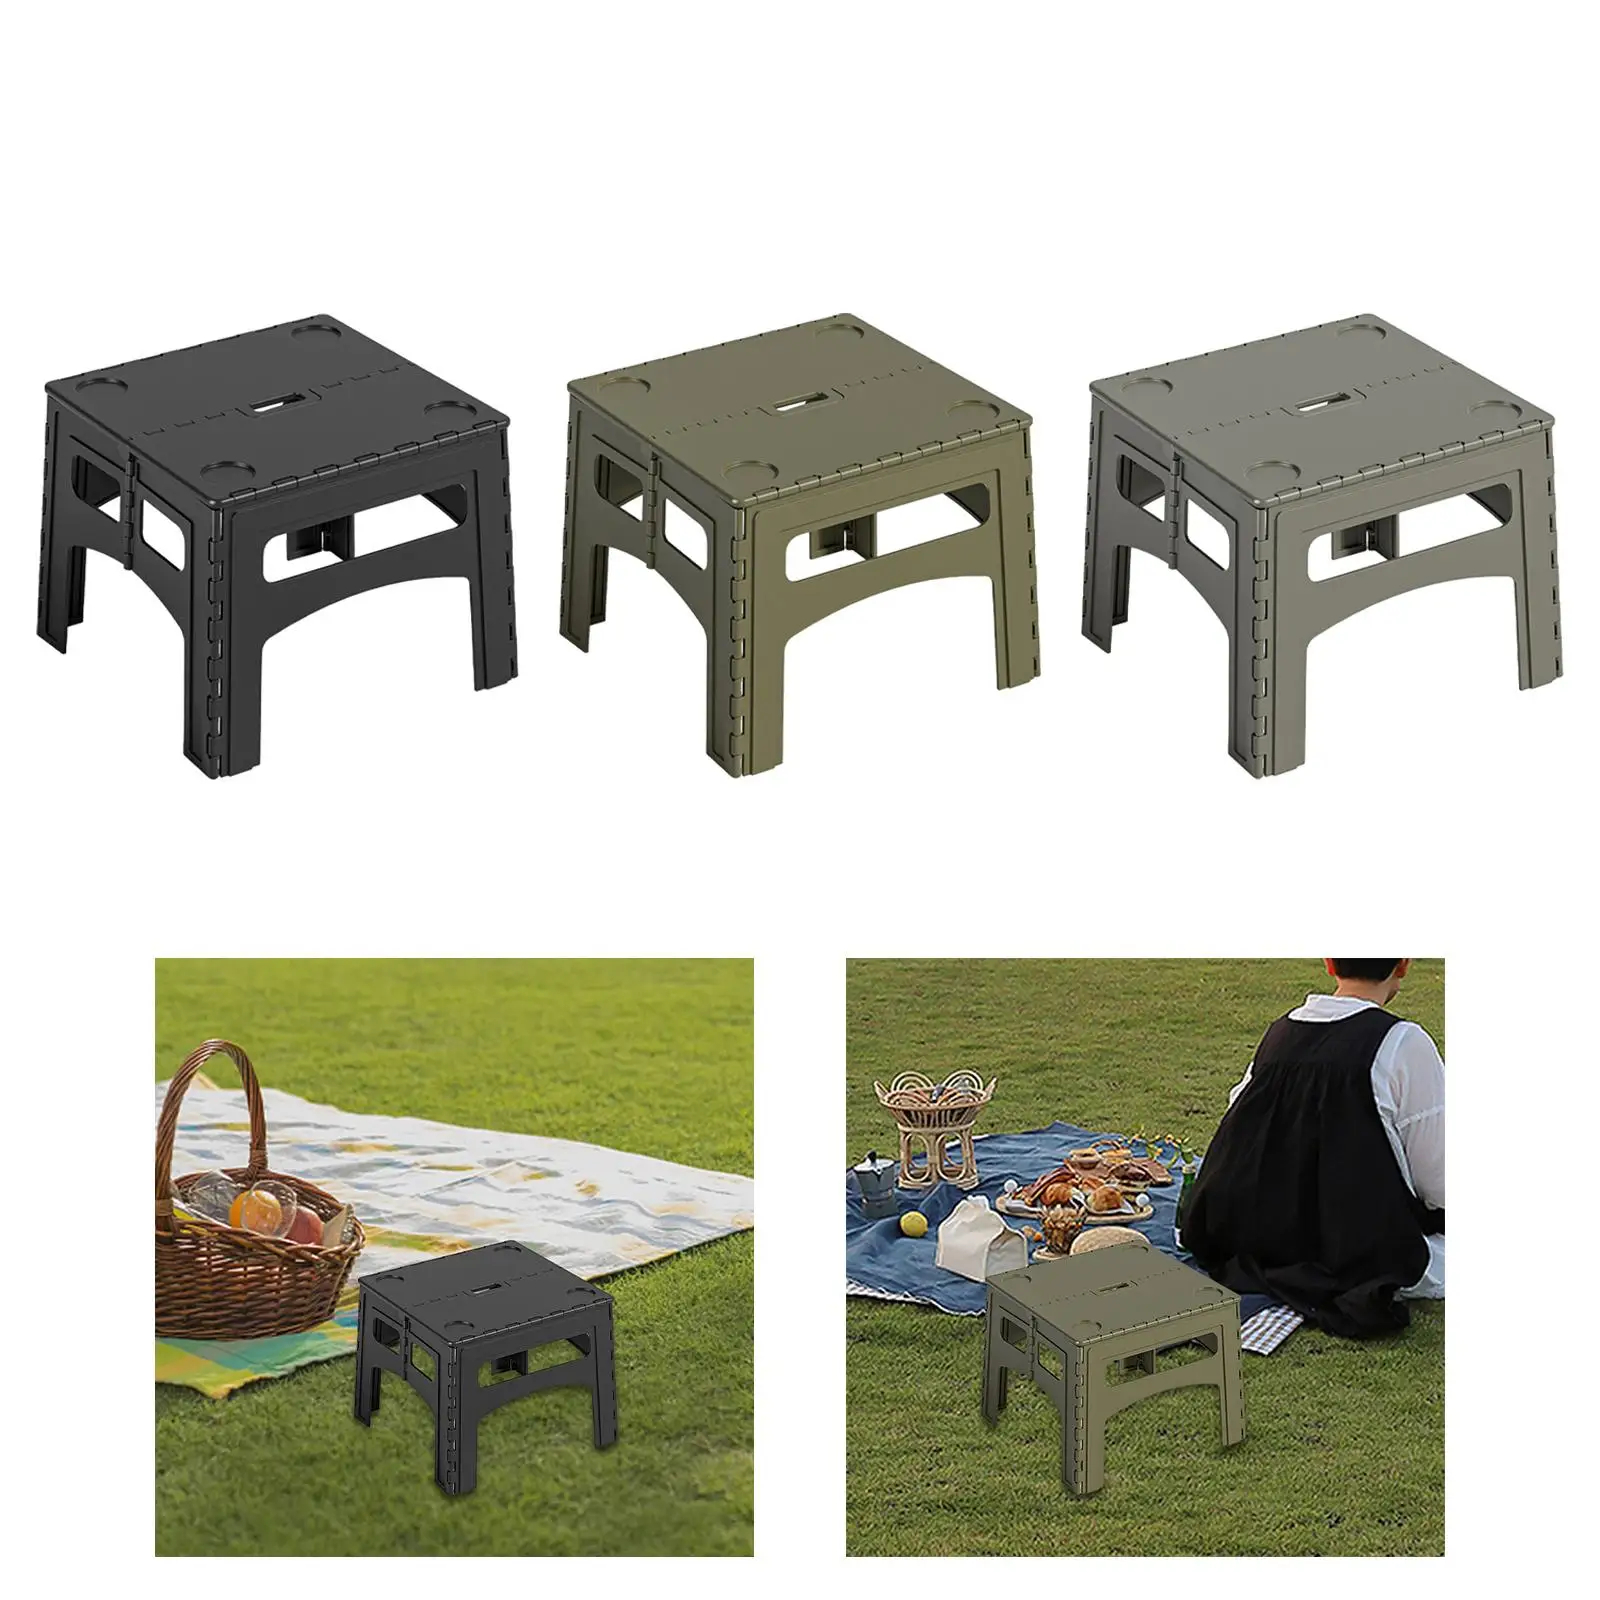 Outdoor Folding Table, Foldable Picnic Table, Portable Camp Table, Camping Table for Backpacking, Cooking, Garden